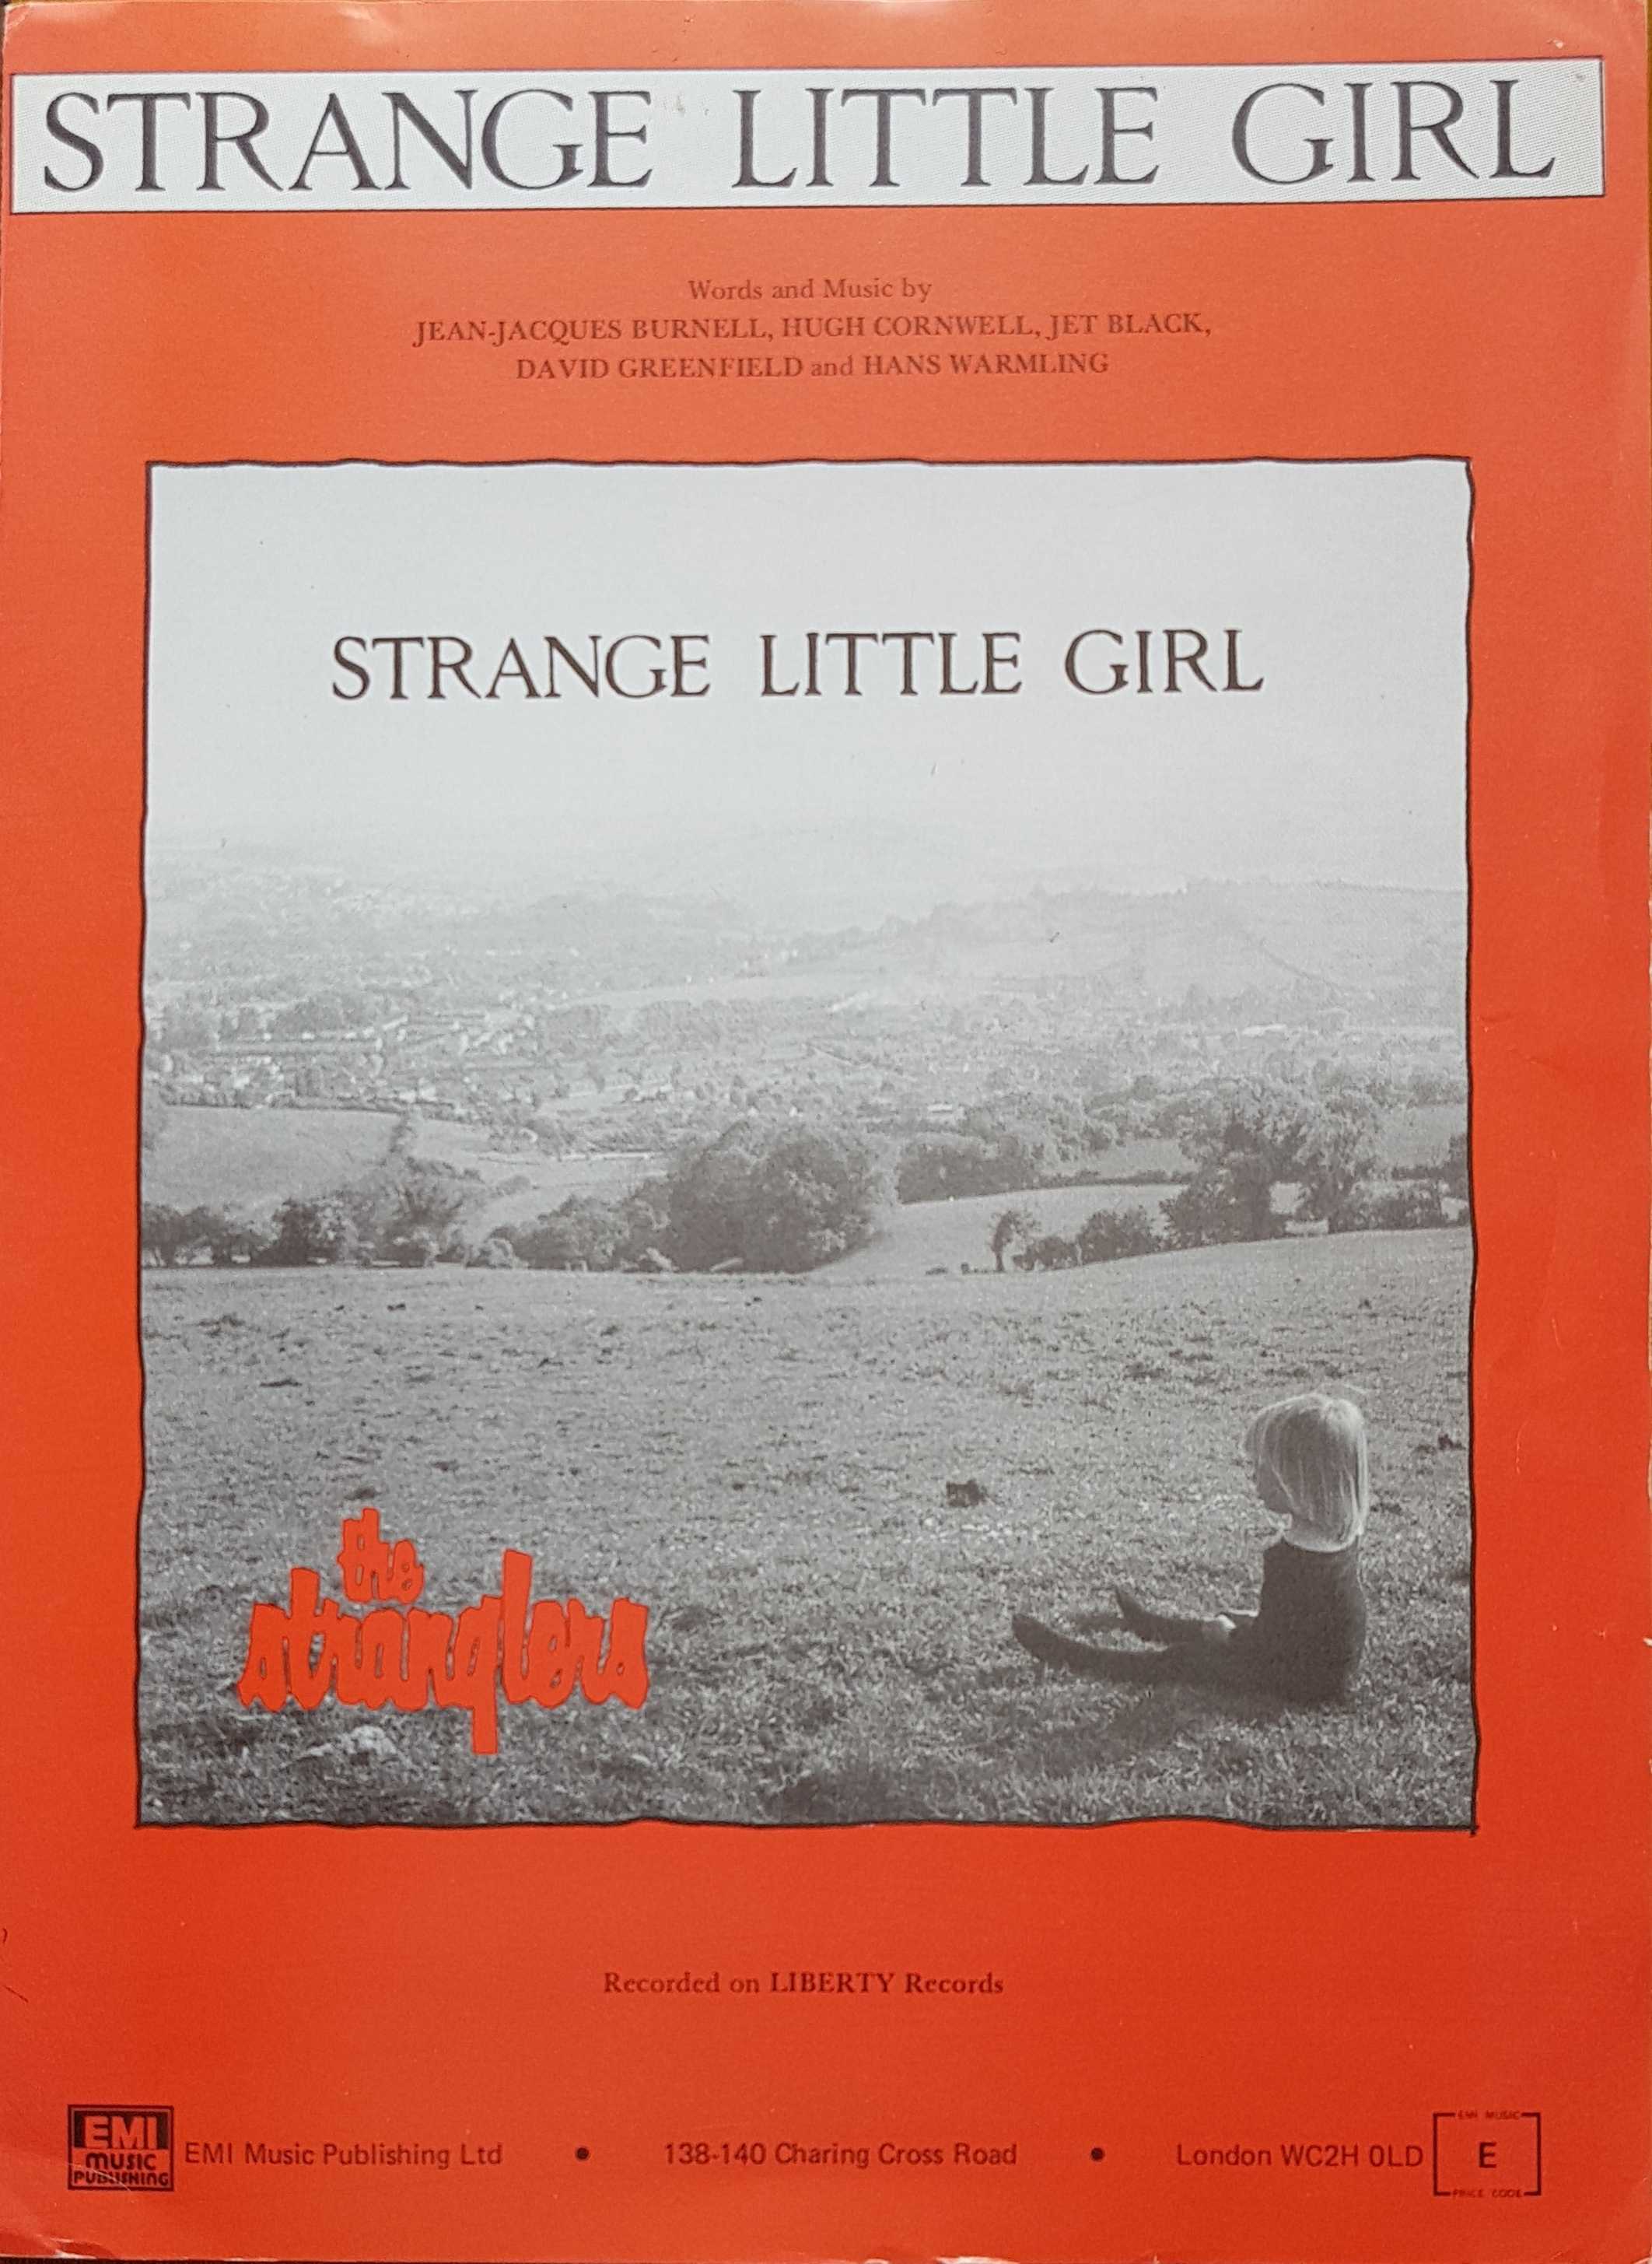 Picture of SM-SLGSM Strange little girl by artist The Stranglers  from The Stranglers books